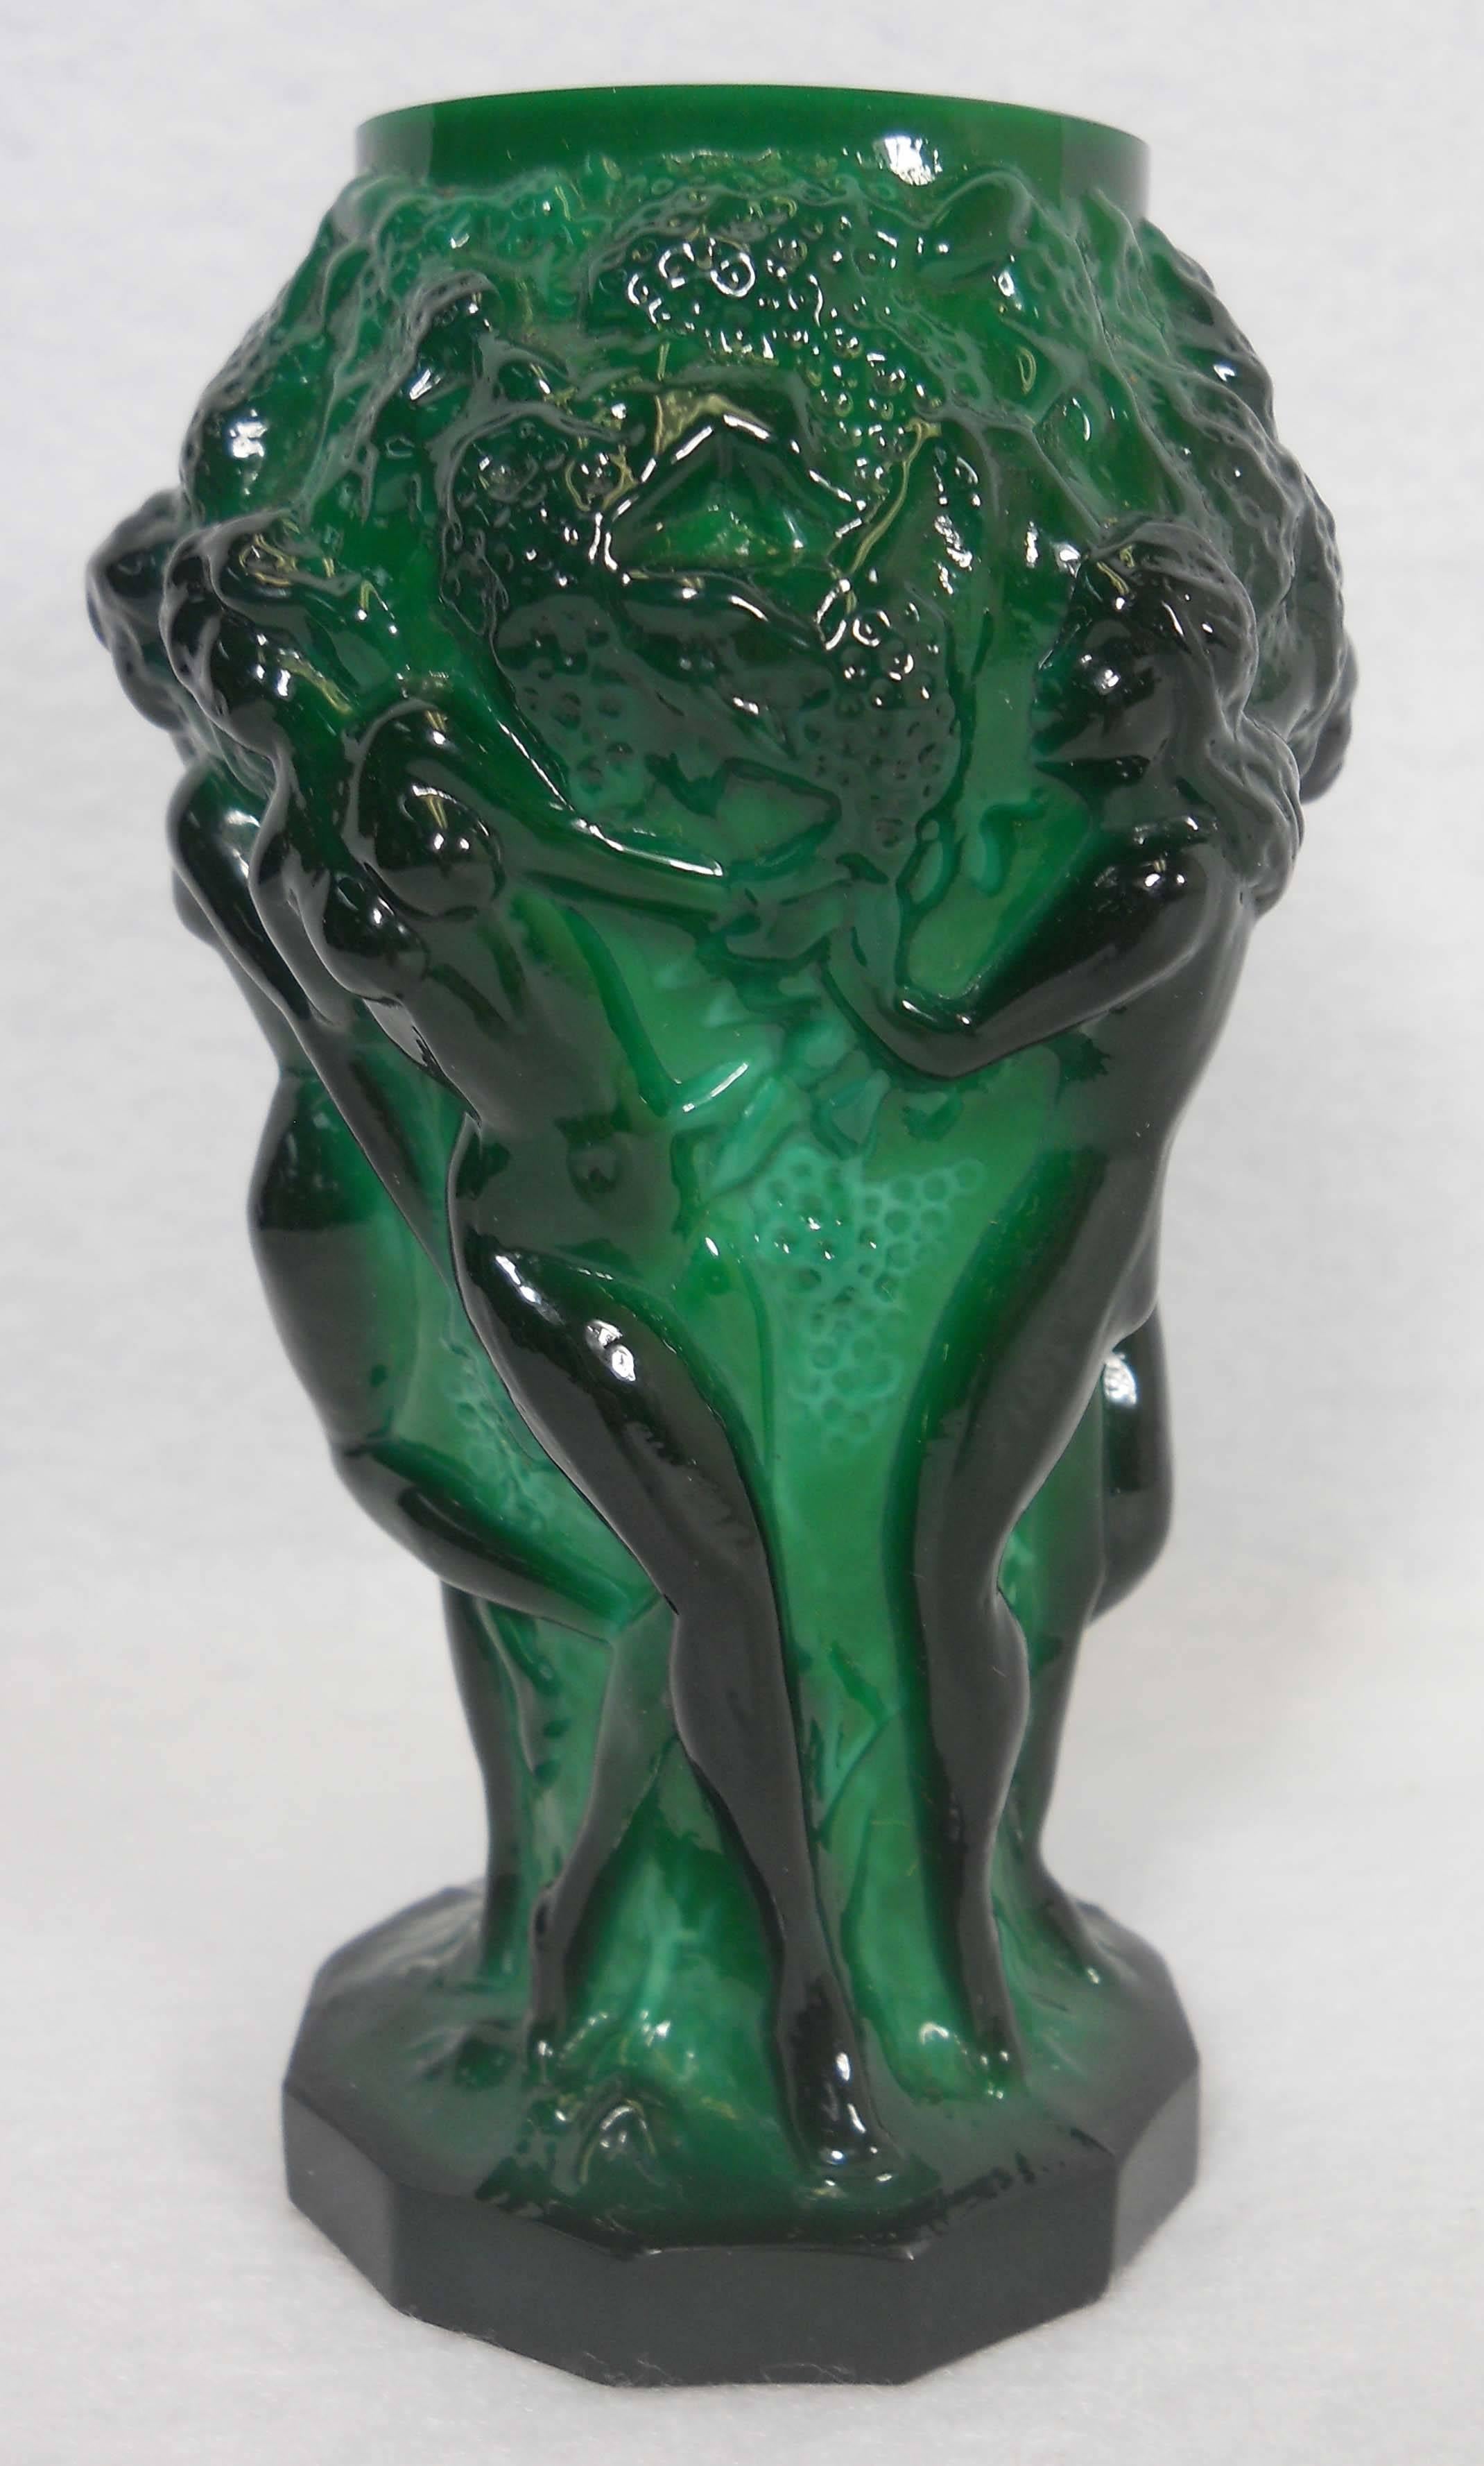 Mid-20th Century Art Deco Malachite Glass Vase by Riedel Glass for Schlevogt's 1930s Ingrid Line